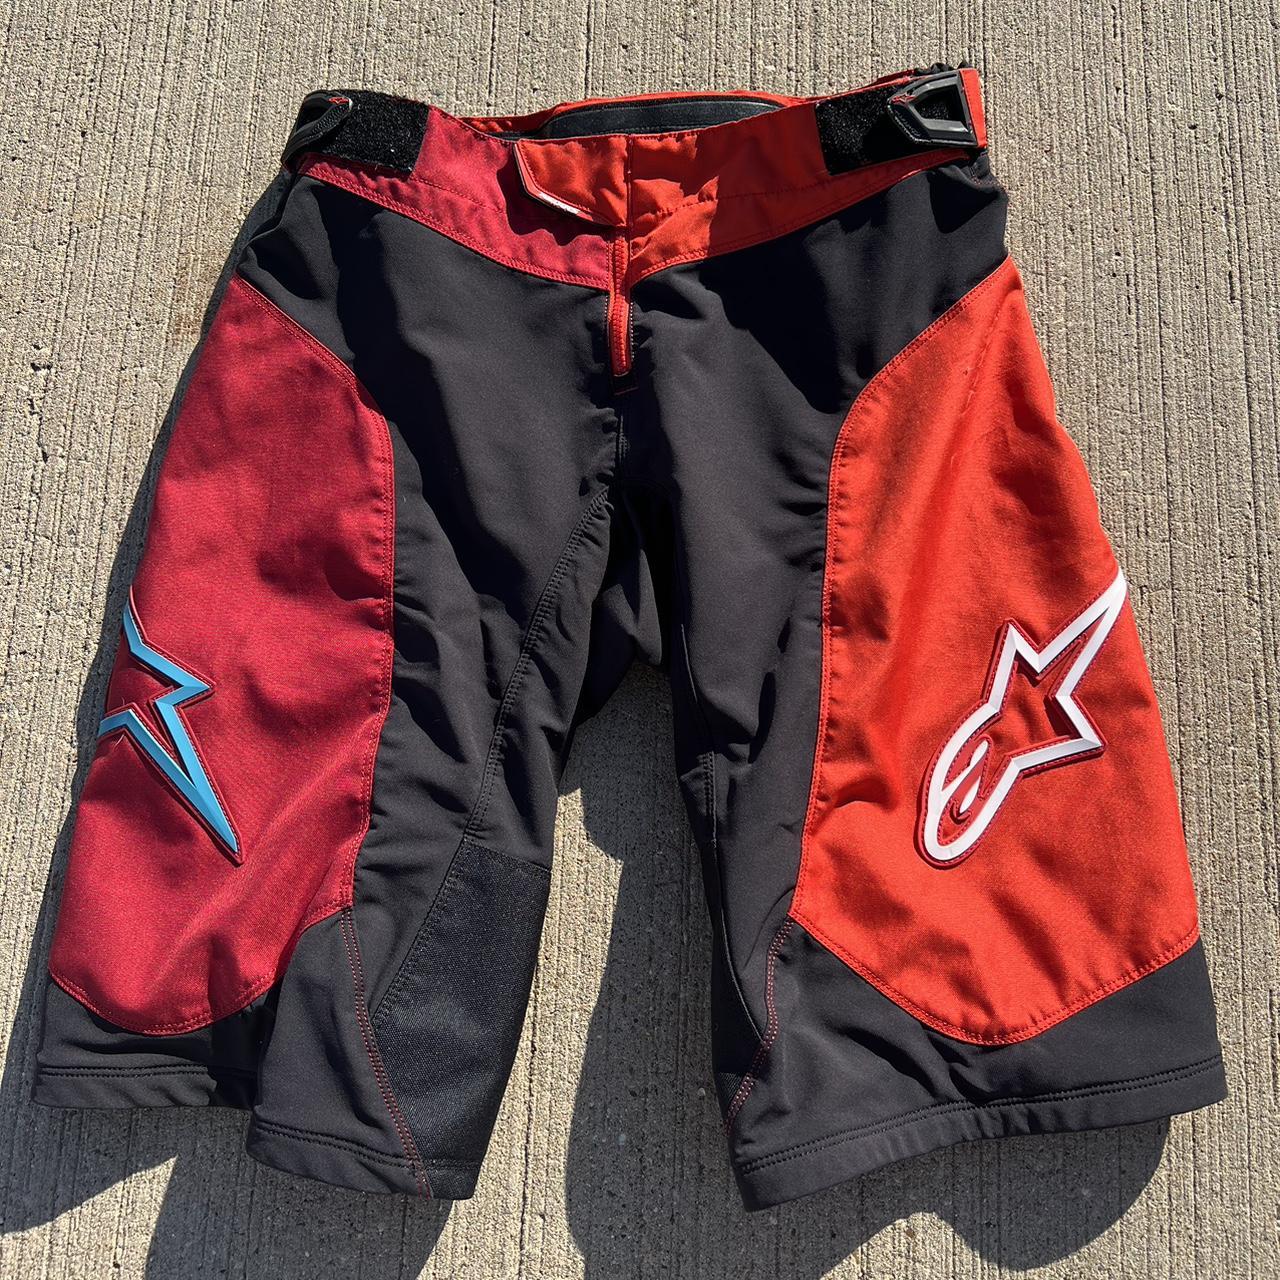 Alpine Design Men's Red and Black Shorts